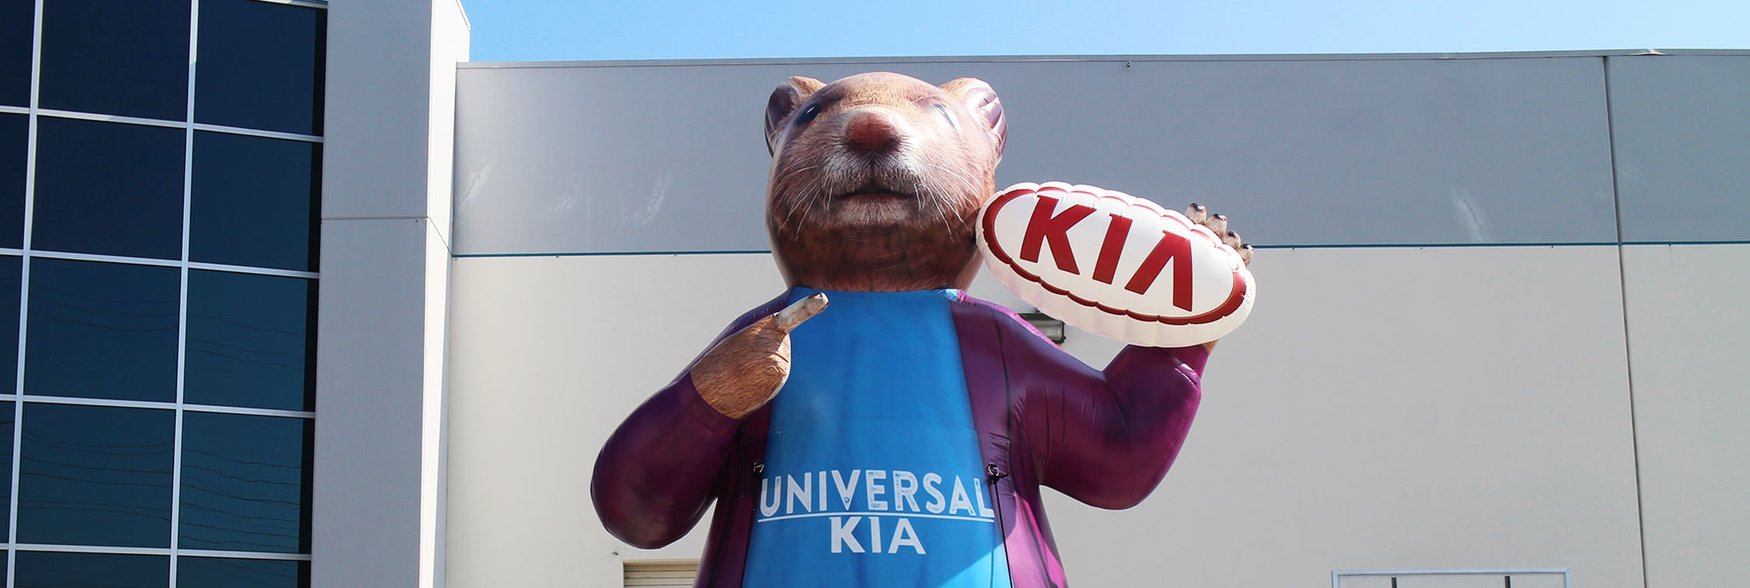 universal-kia-hamster-inflatable